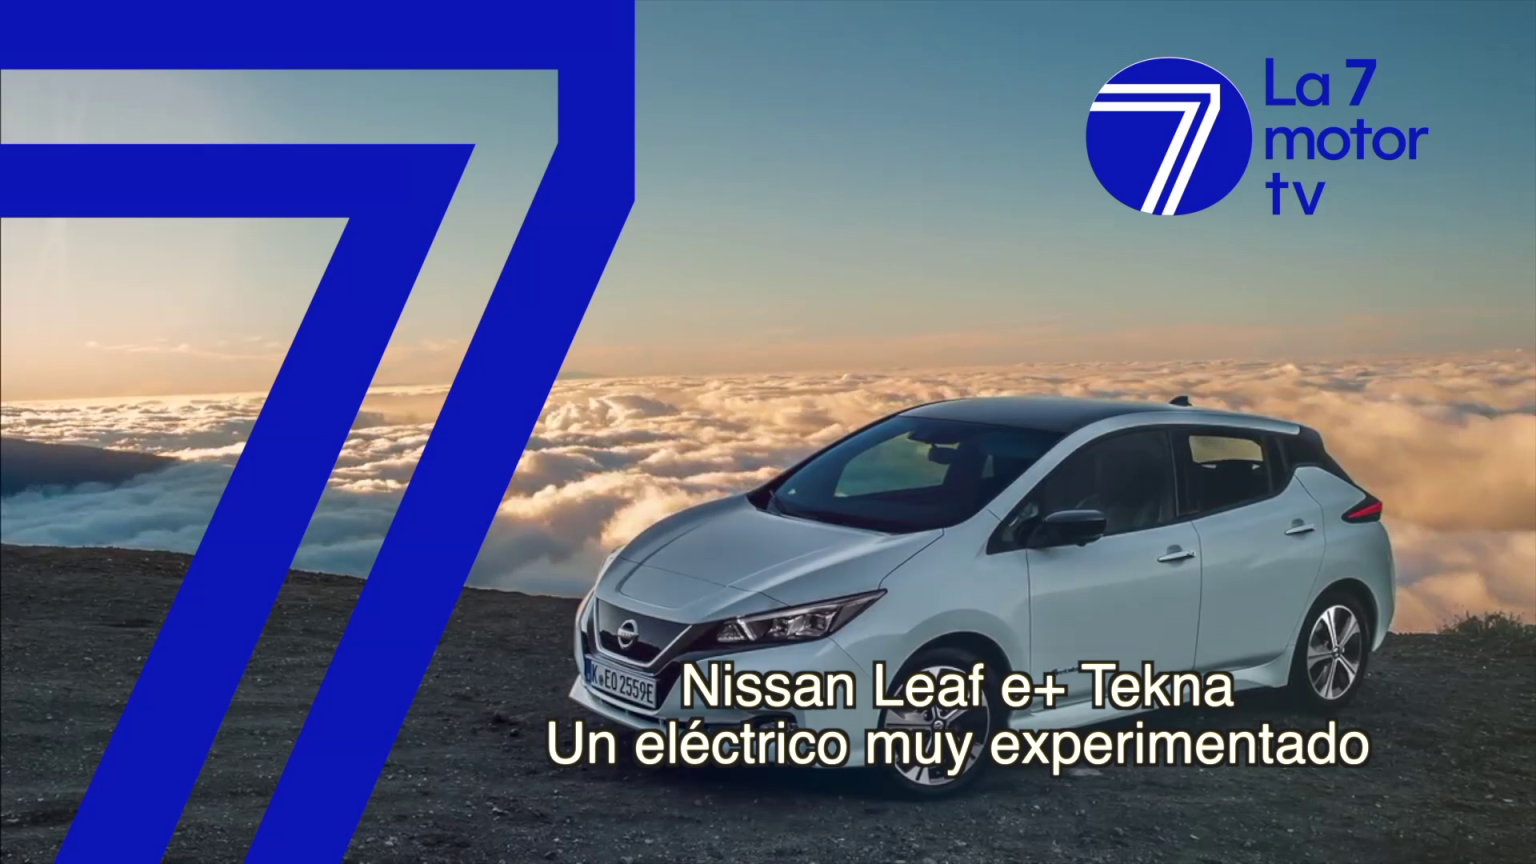 Nissan Leaf e+ Tekna: un eléctrico muy experimentado